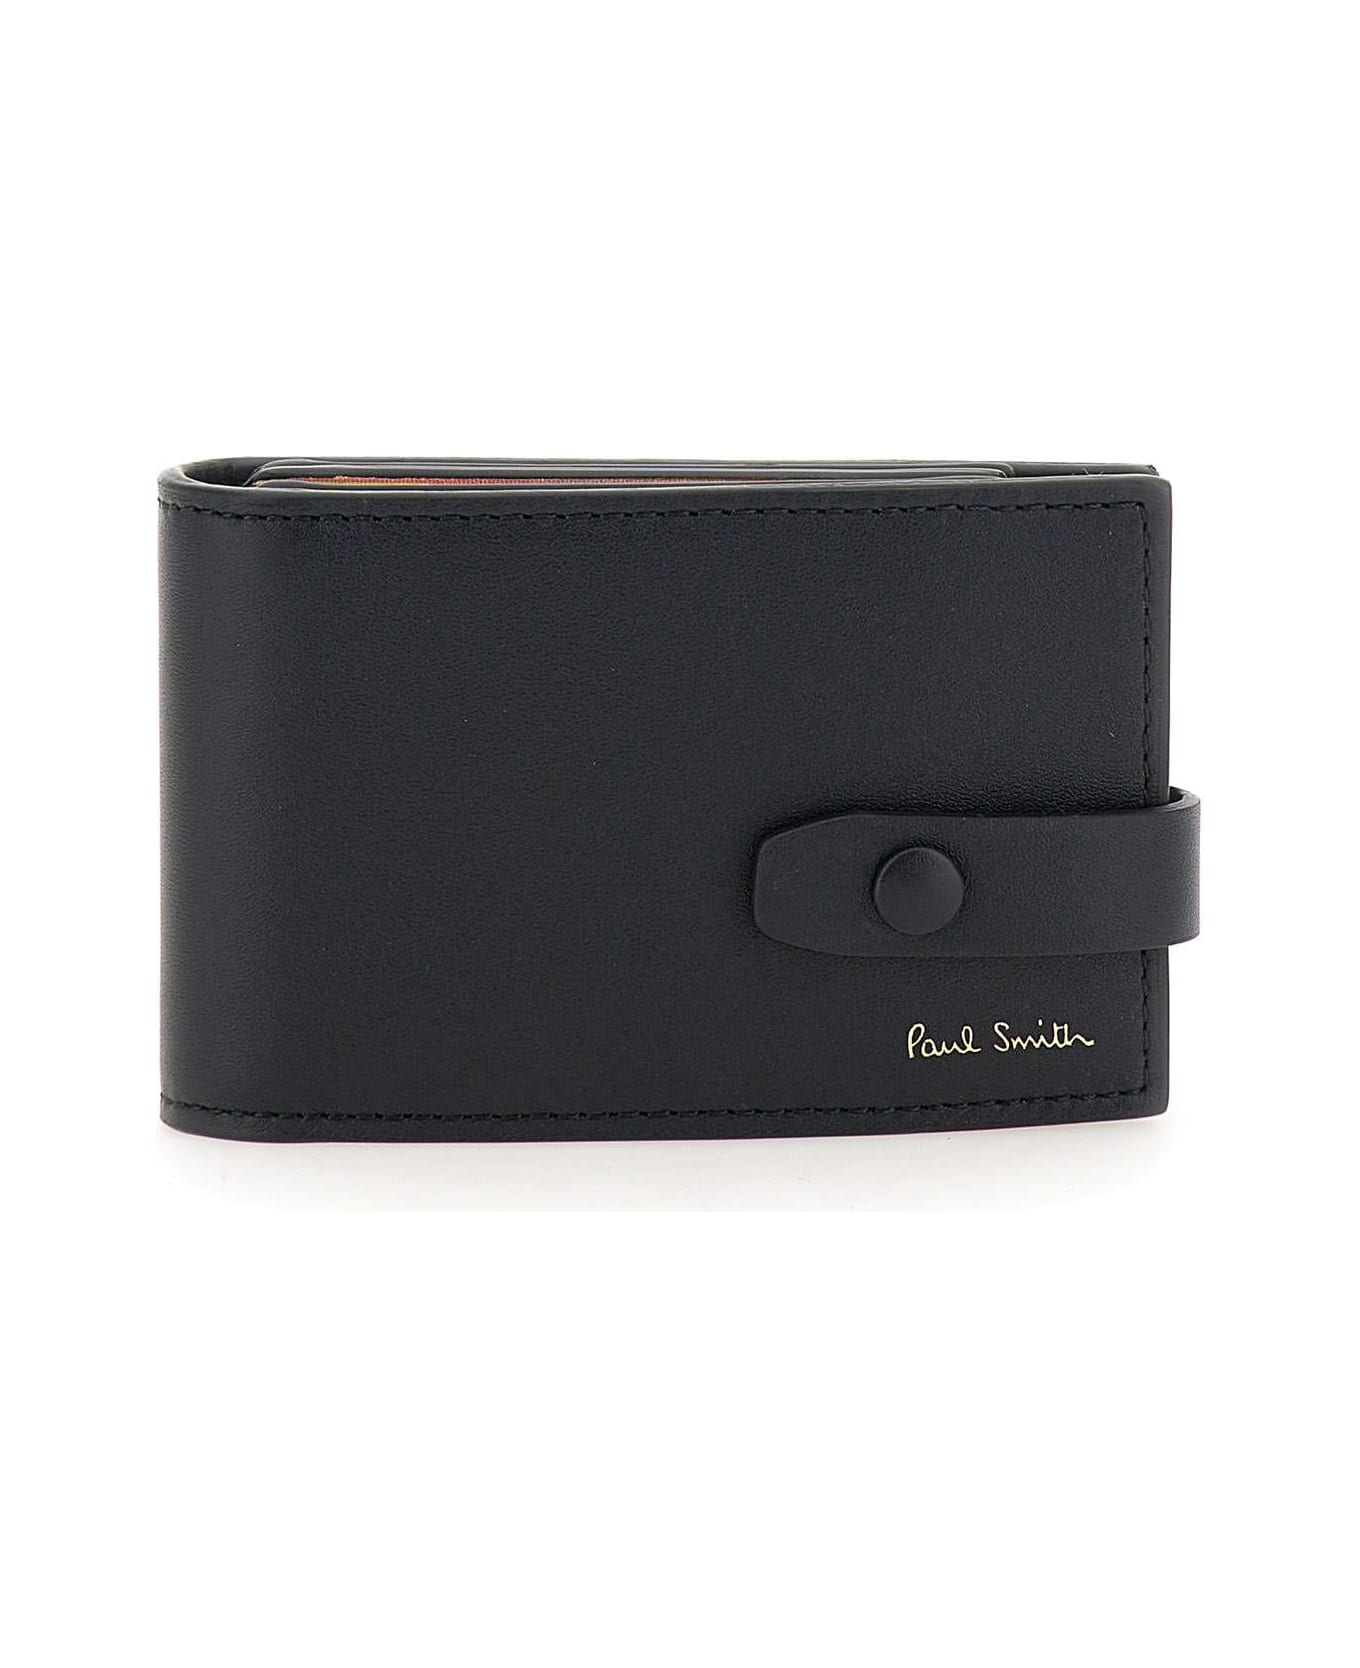 Paul Smith Leather Card Holder - BLACK